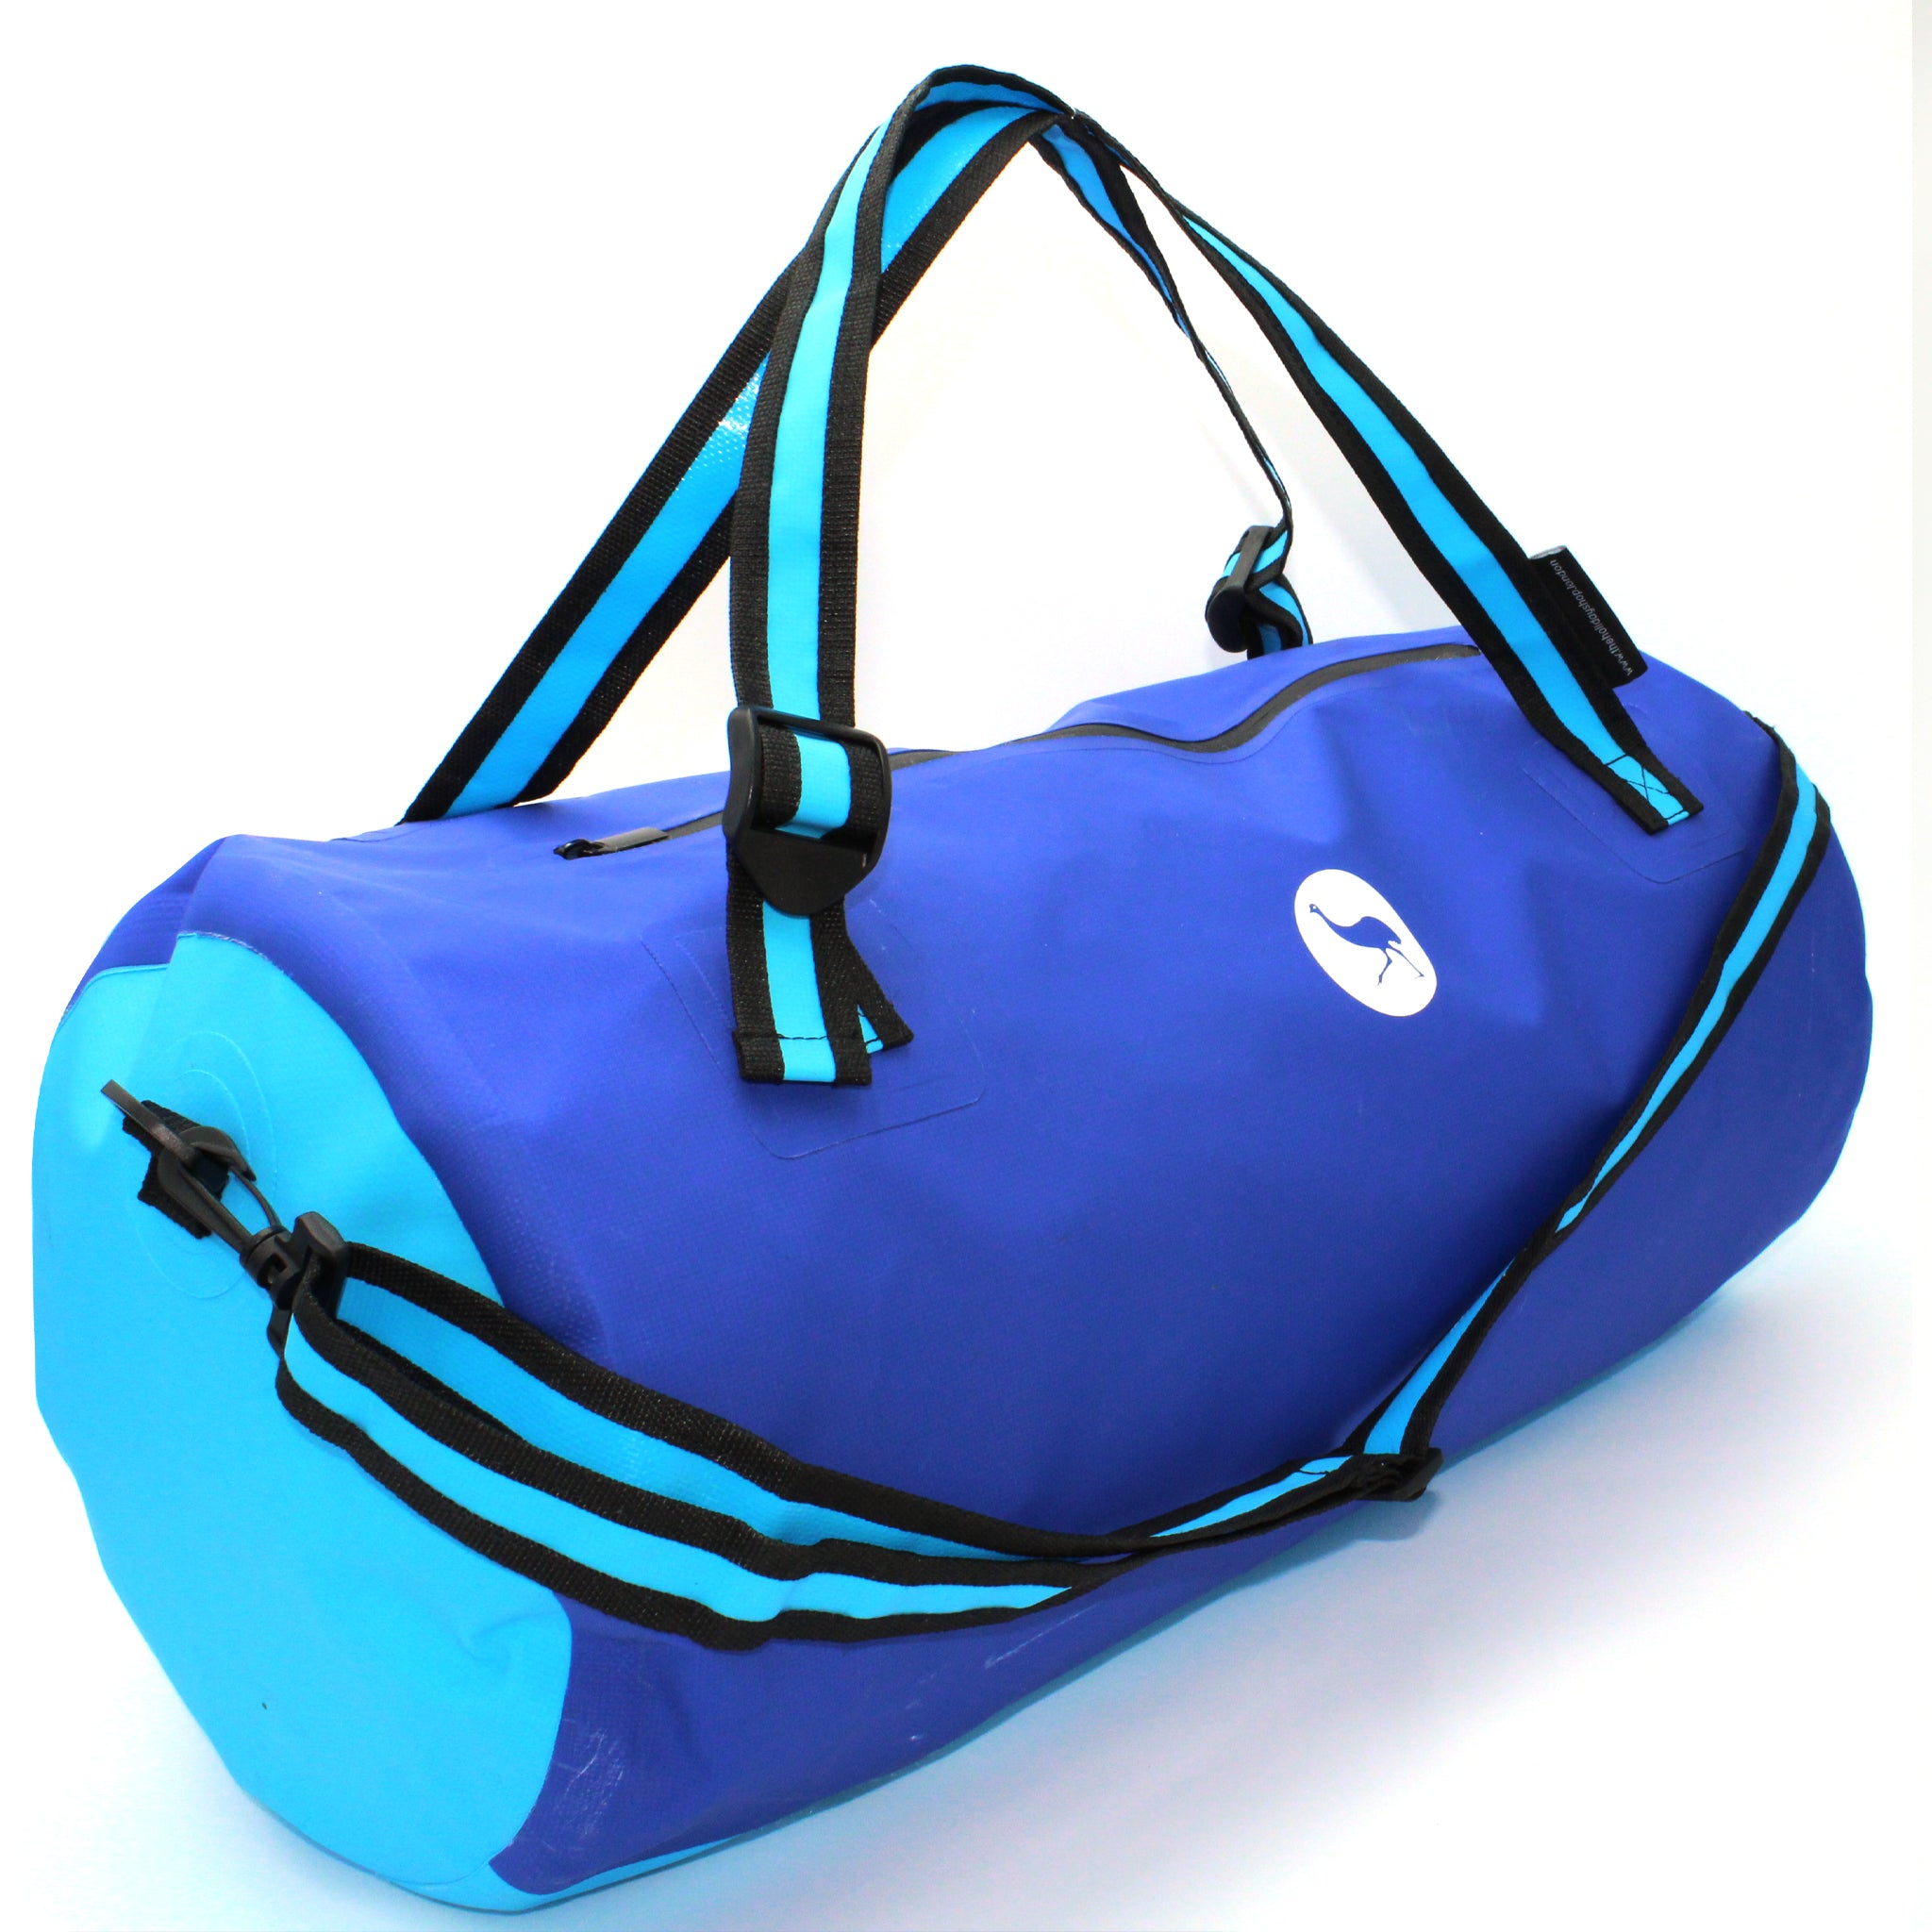 40L Dry Bag Duffel - Blue/Orange